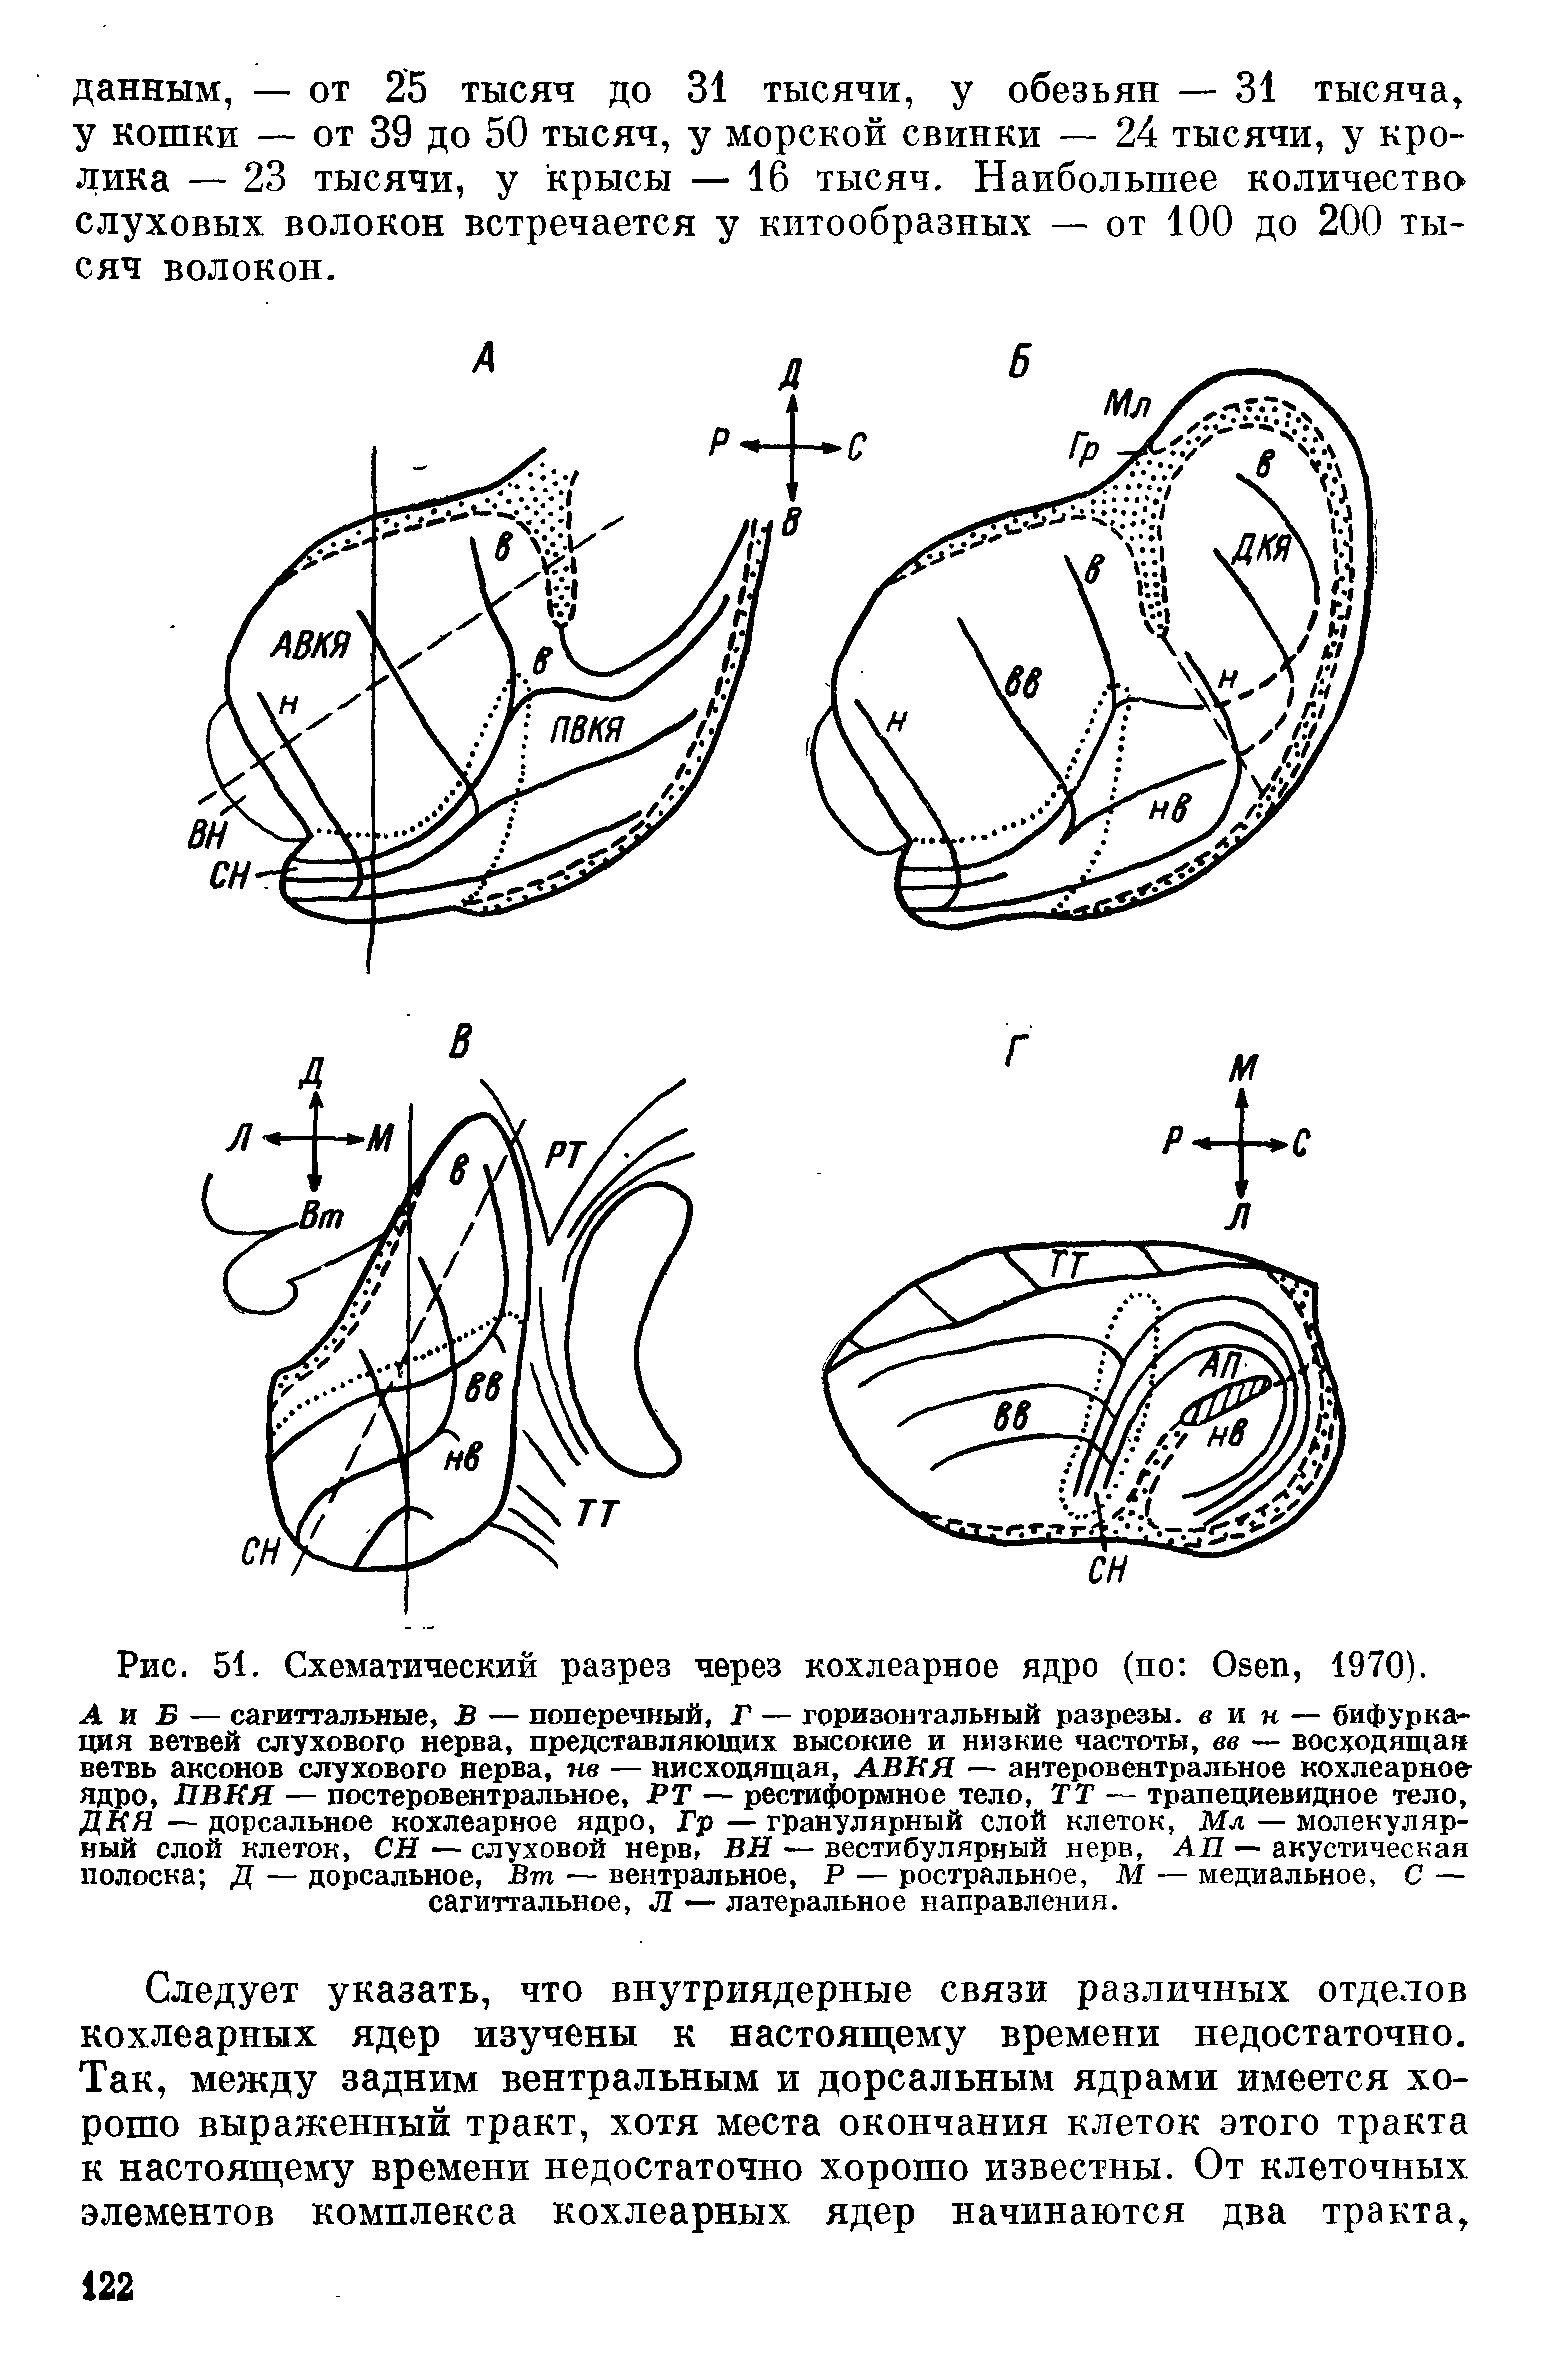 Рис. 51. Схематический разрез через кохлеарное ядро (по Osen, 1970).
